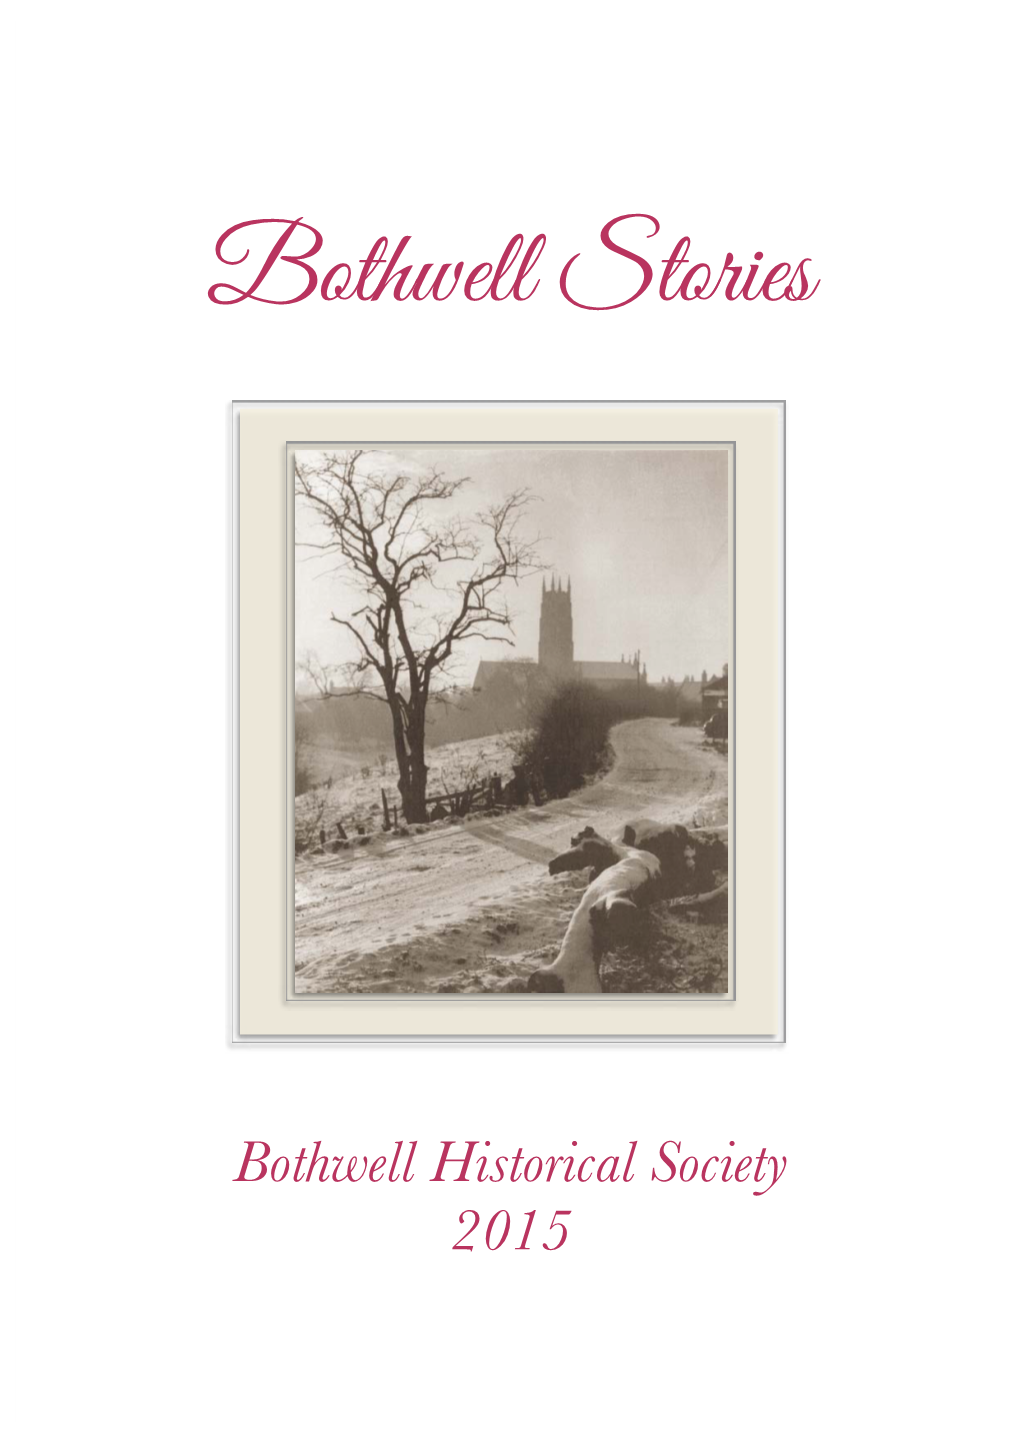 Bothwell Stories